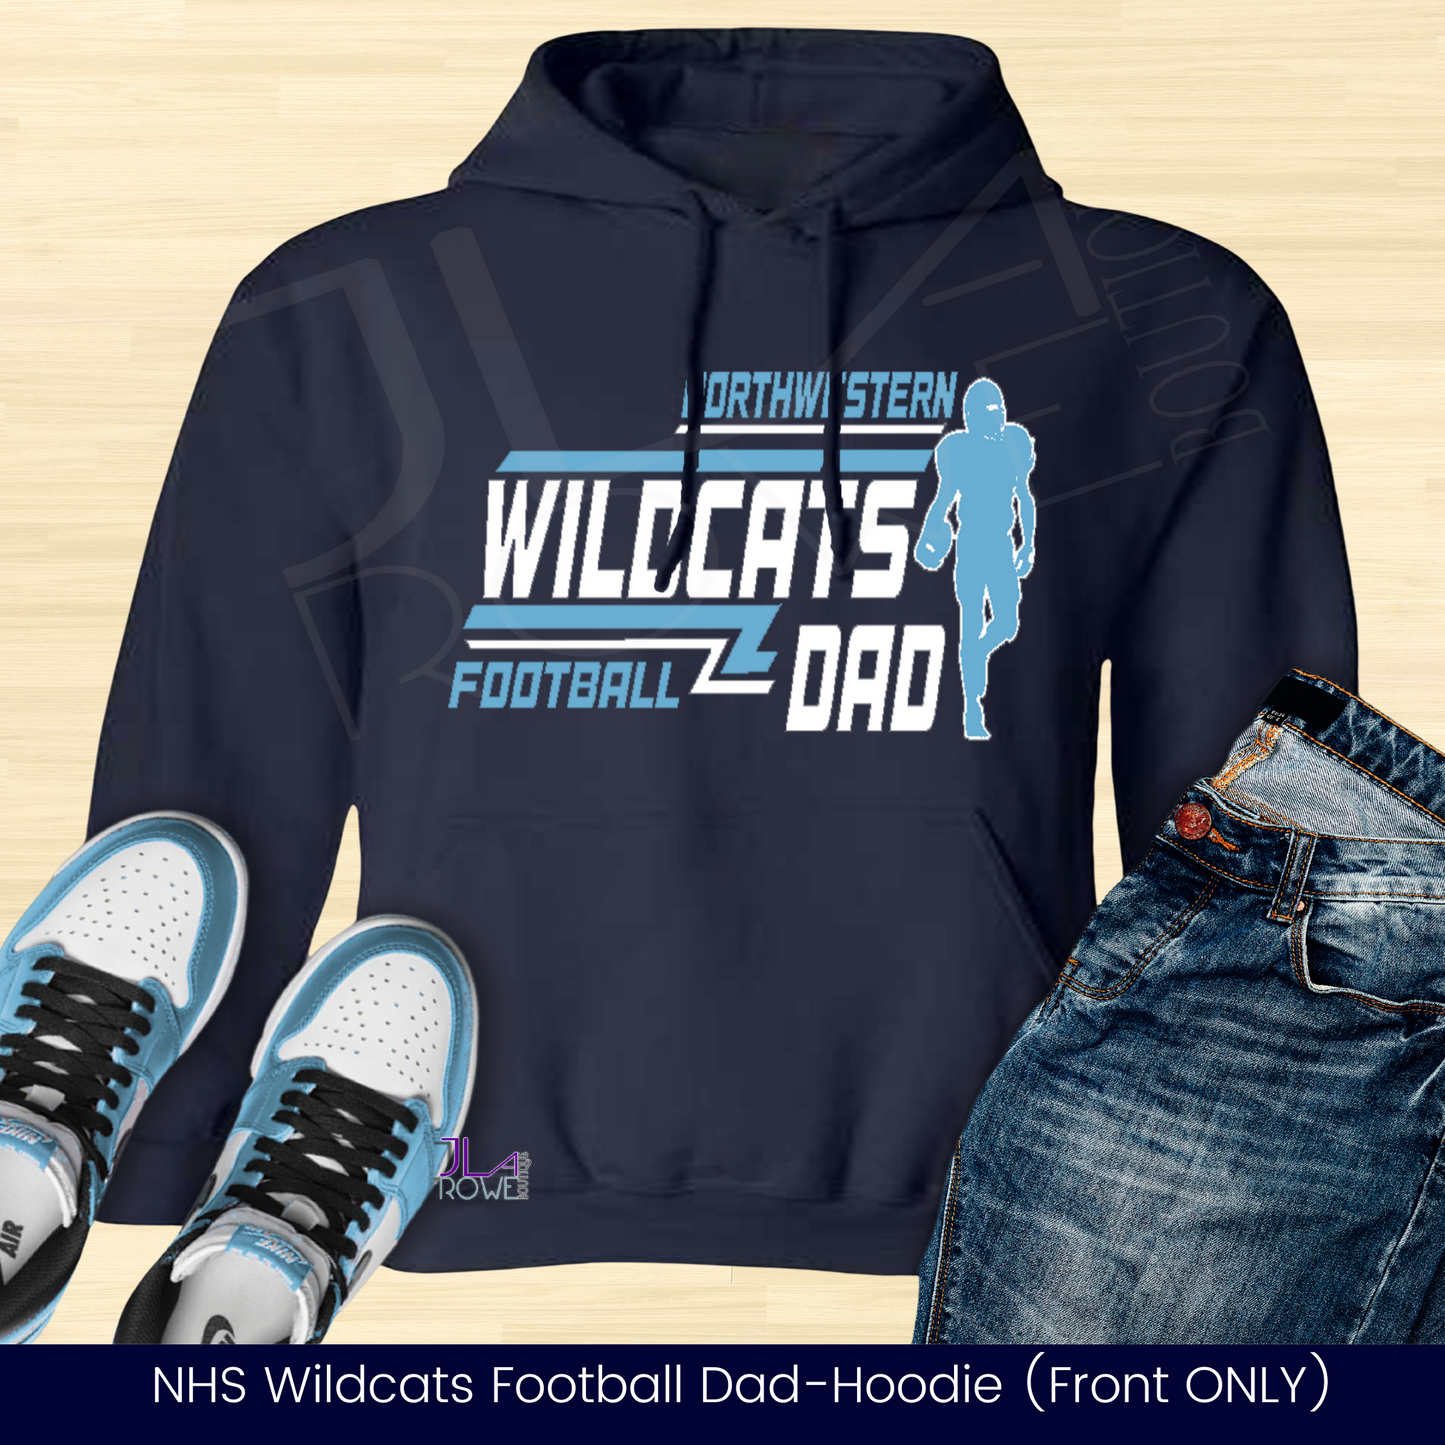 Northwestern: Wildcats Football Mom Center Print Design-904